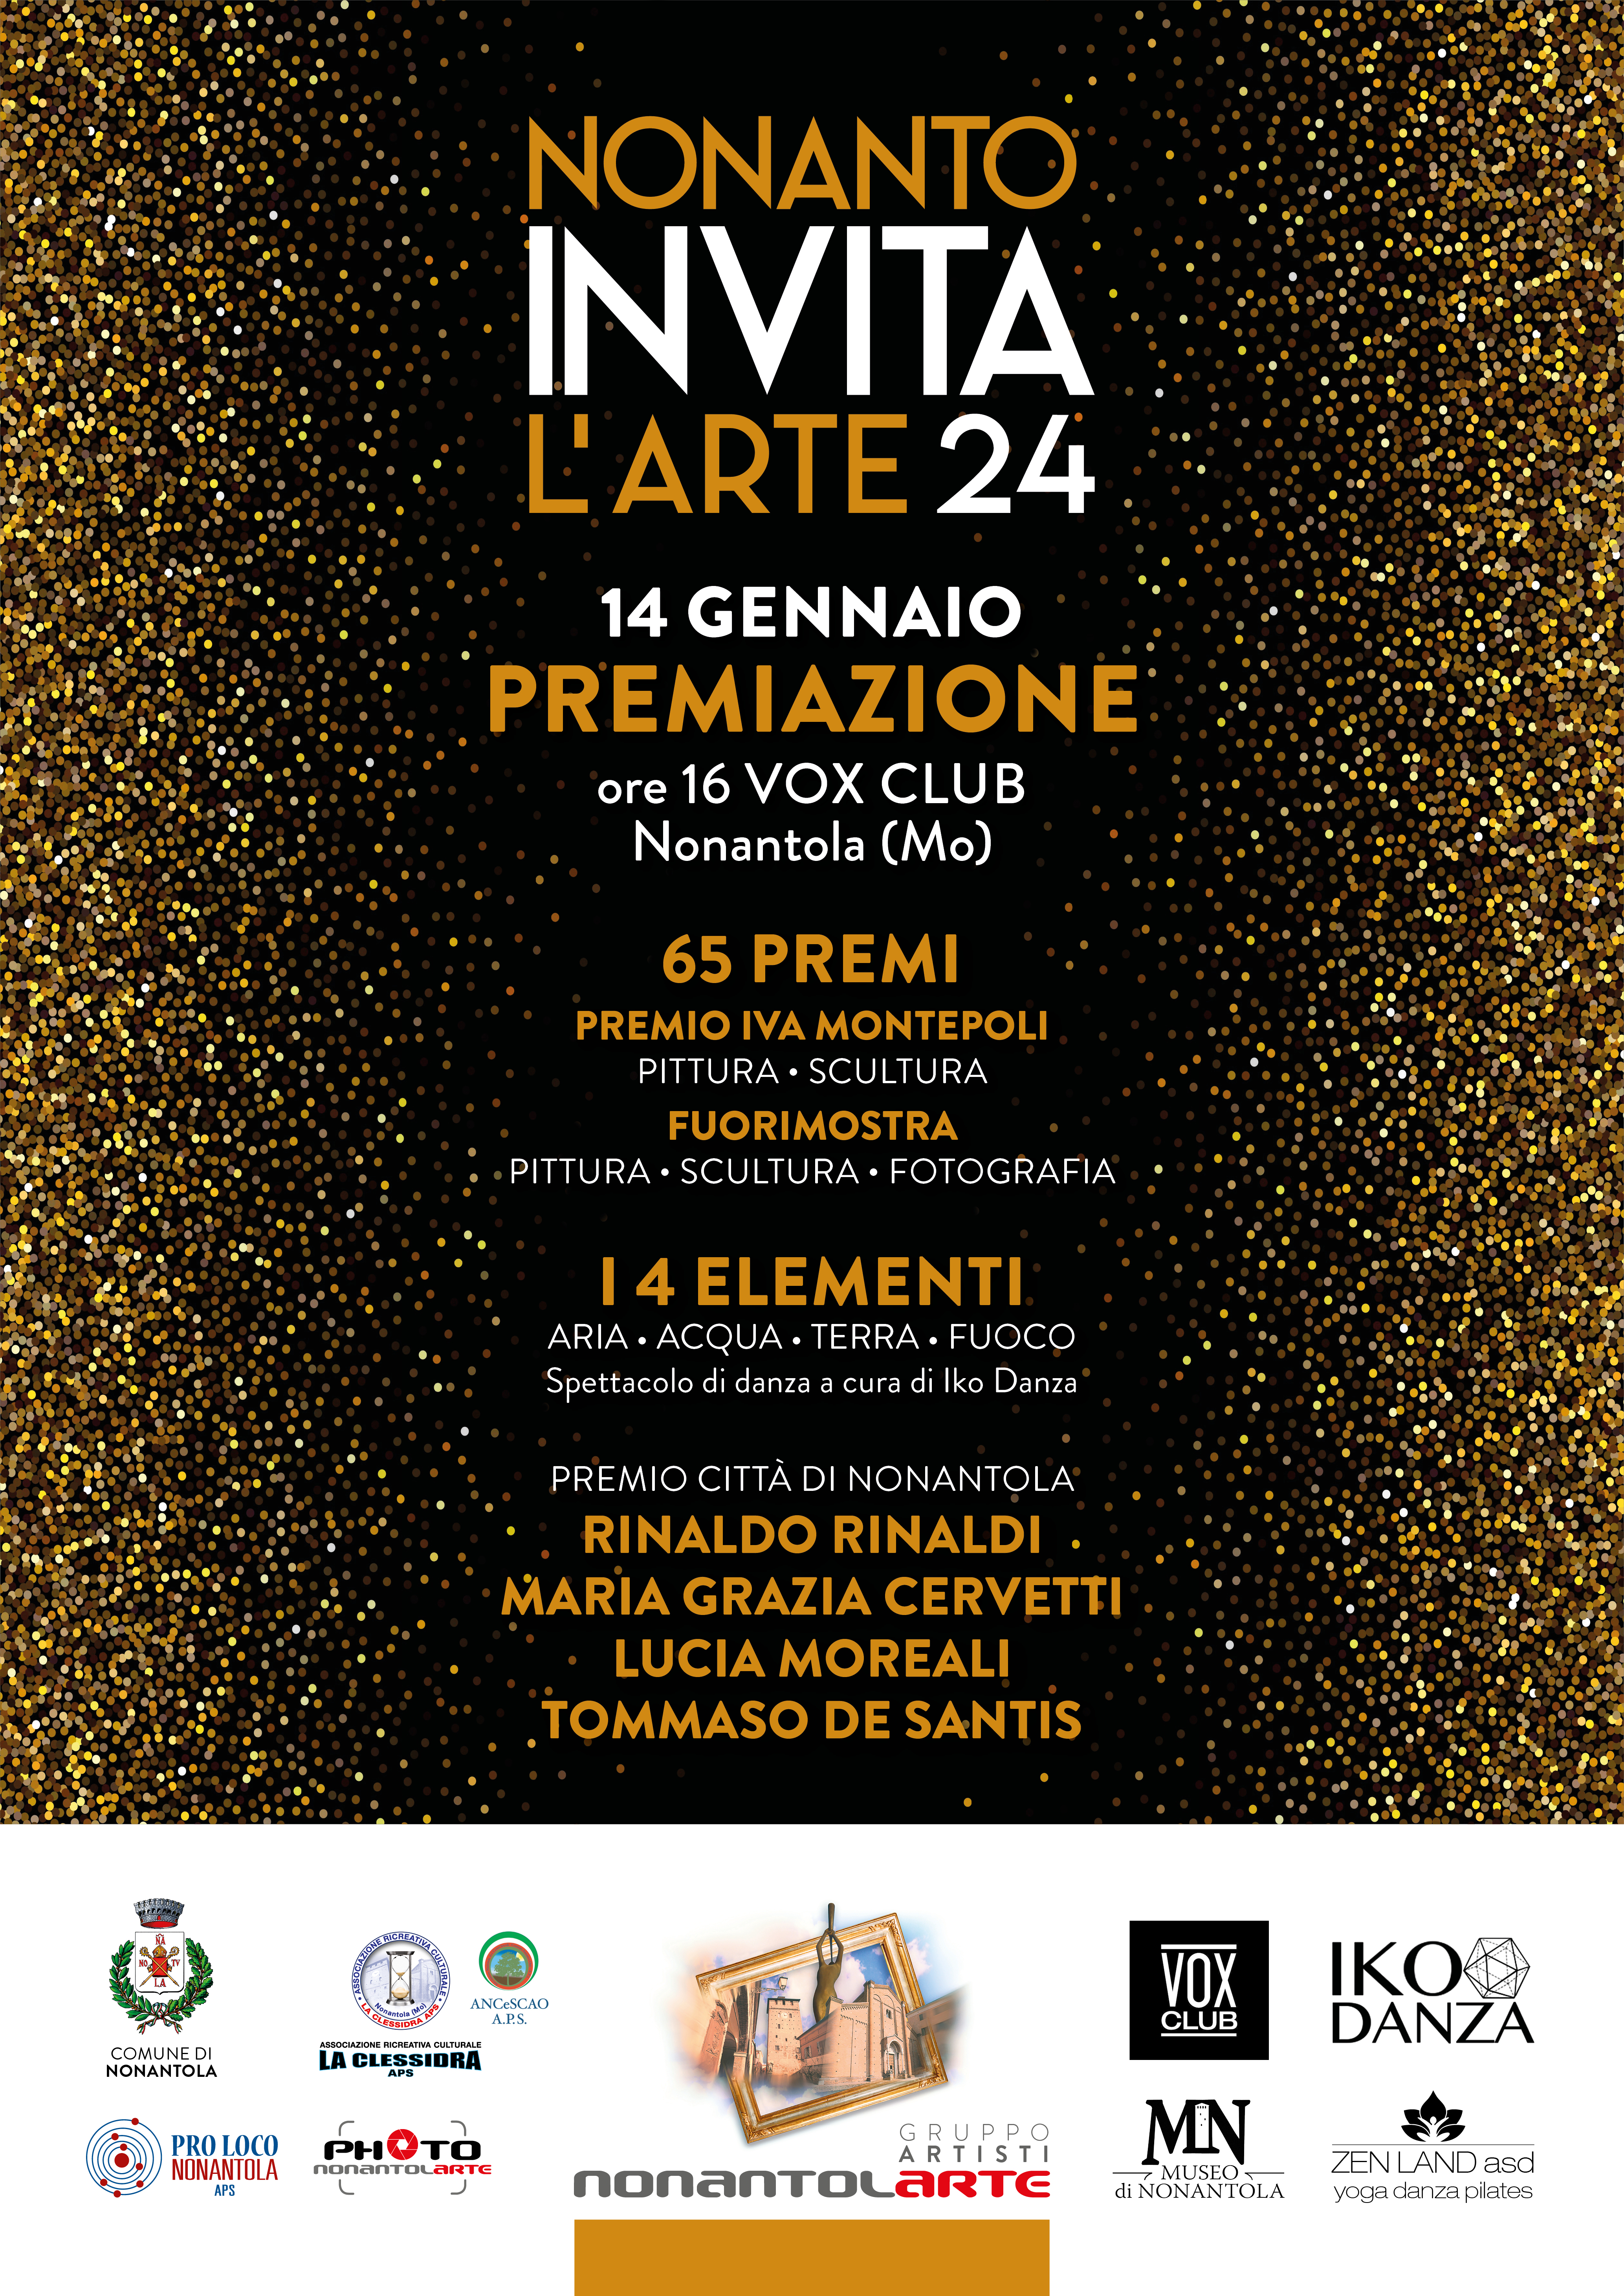 “NonantoInvitalArte24 - Premio Iva Montepoli”